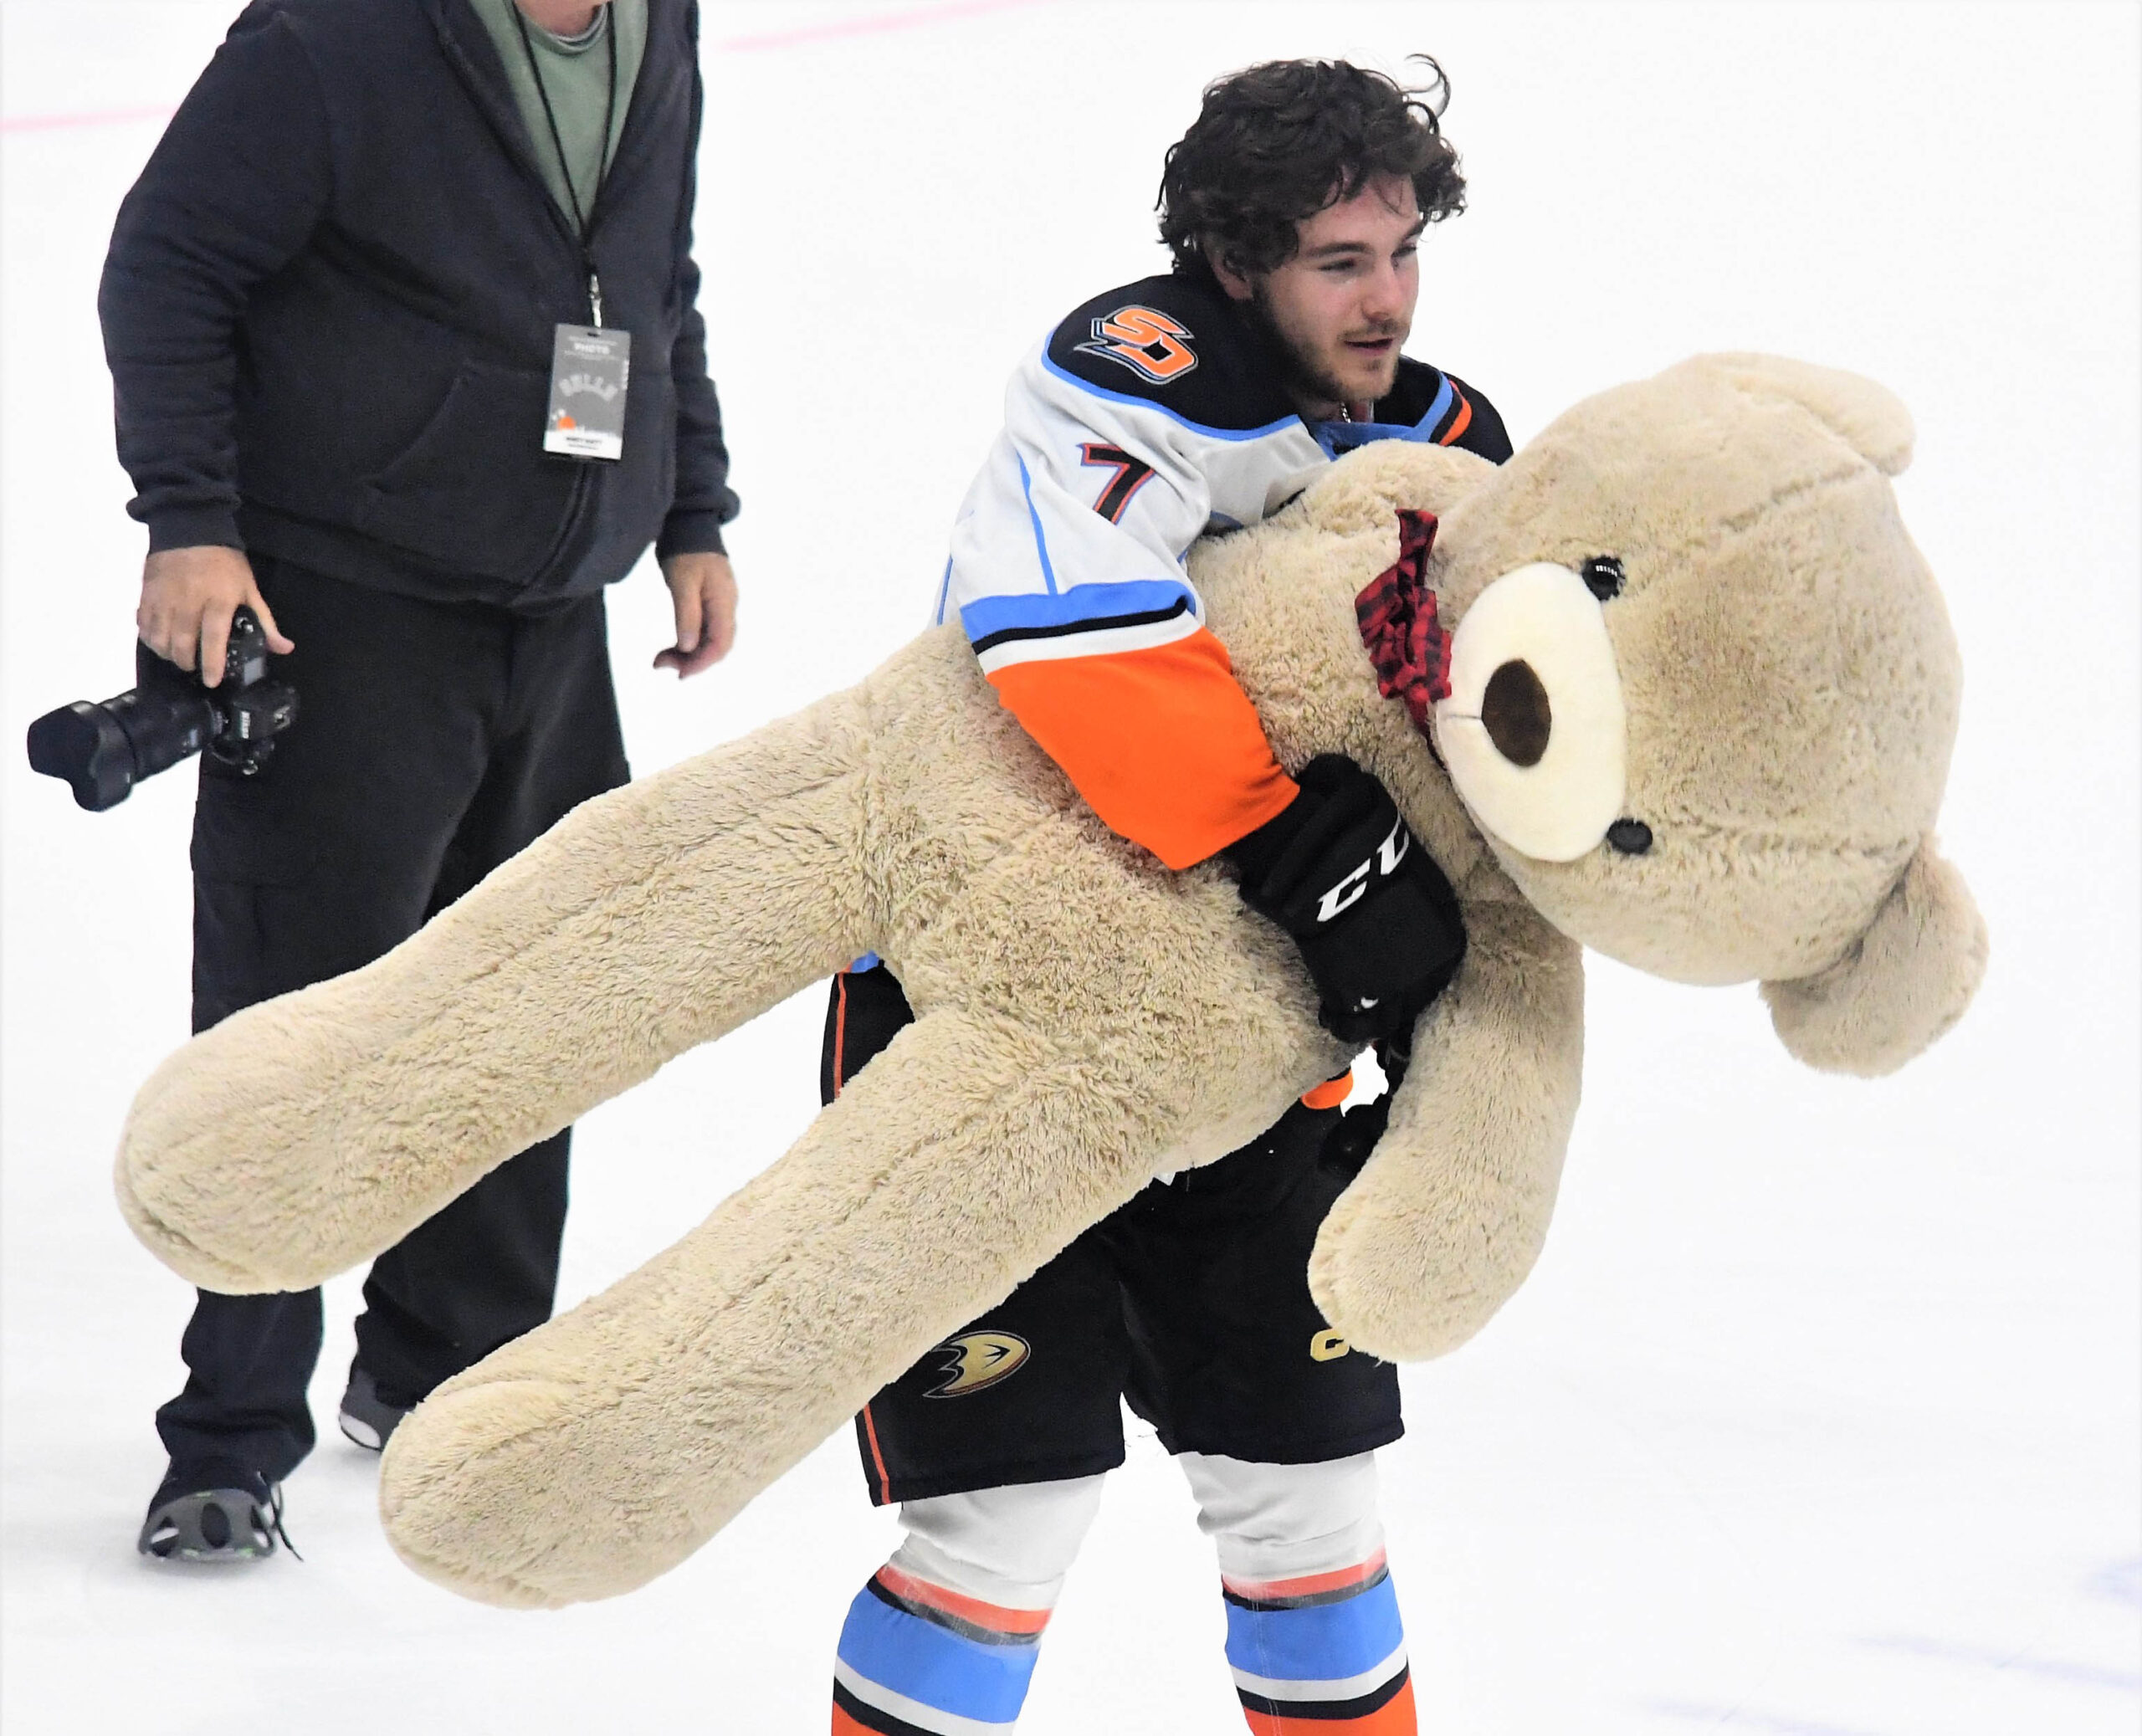 AHL's Hershey Bears set Teddy Bear Toss record